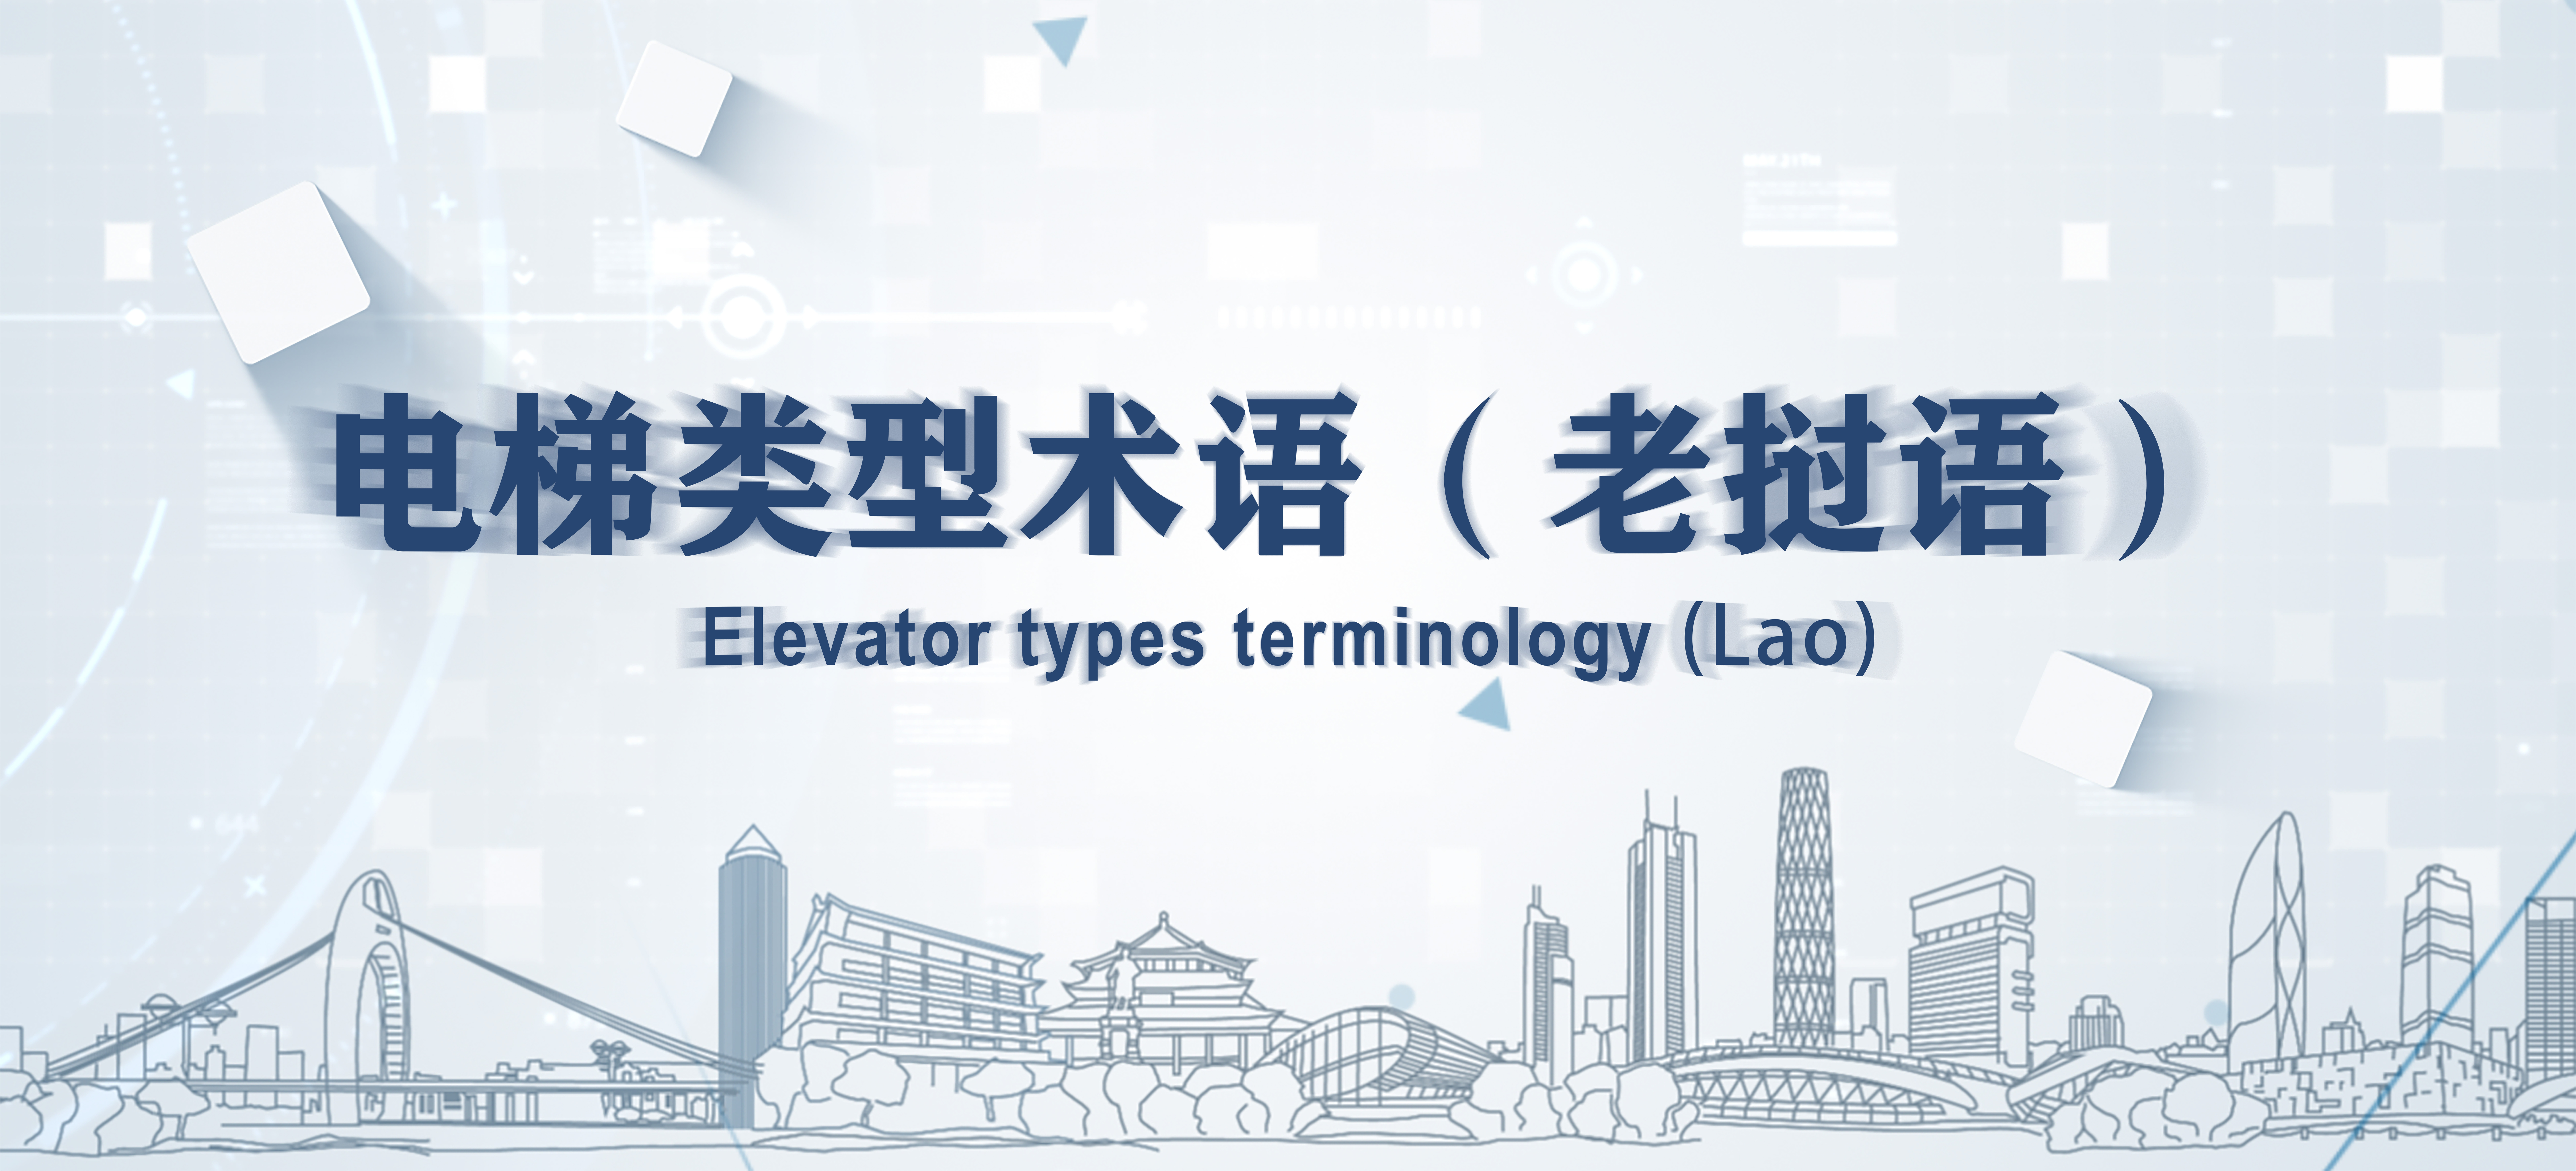 Elevator types terminology (Lao)